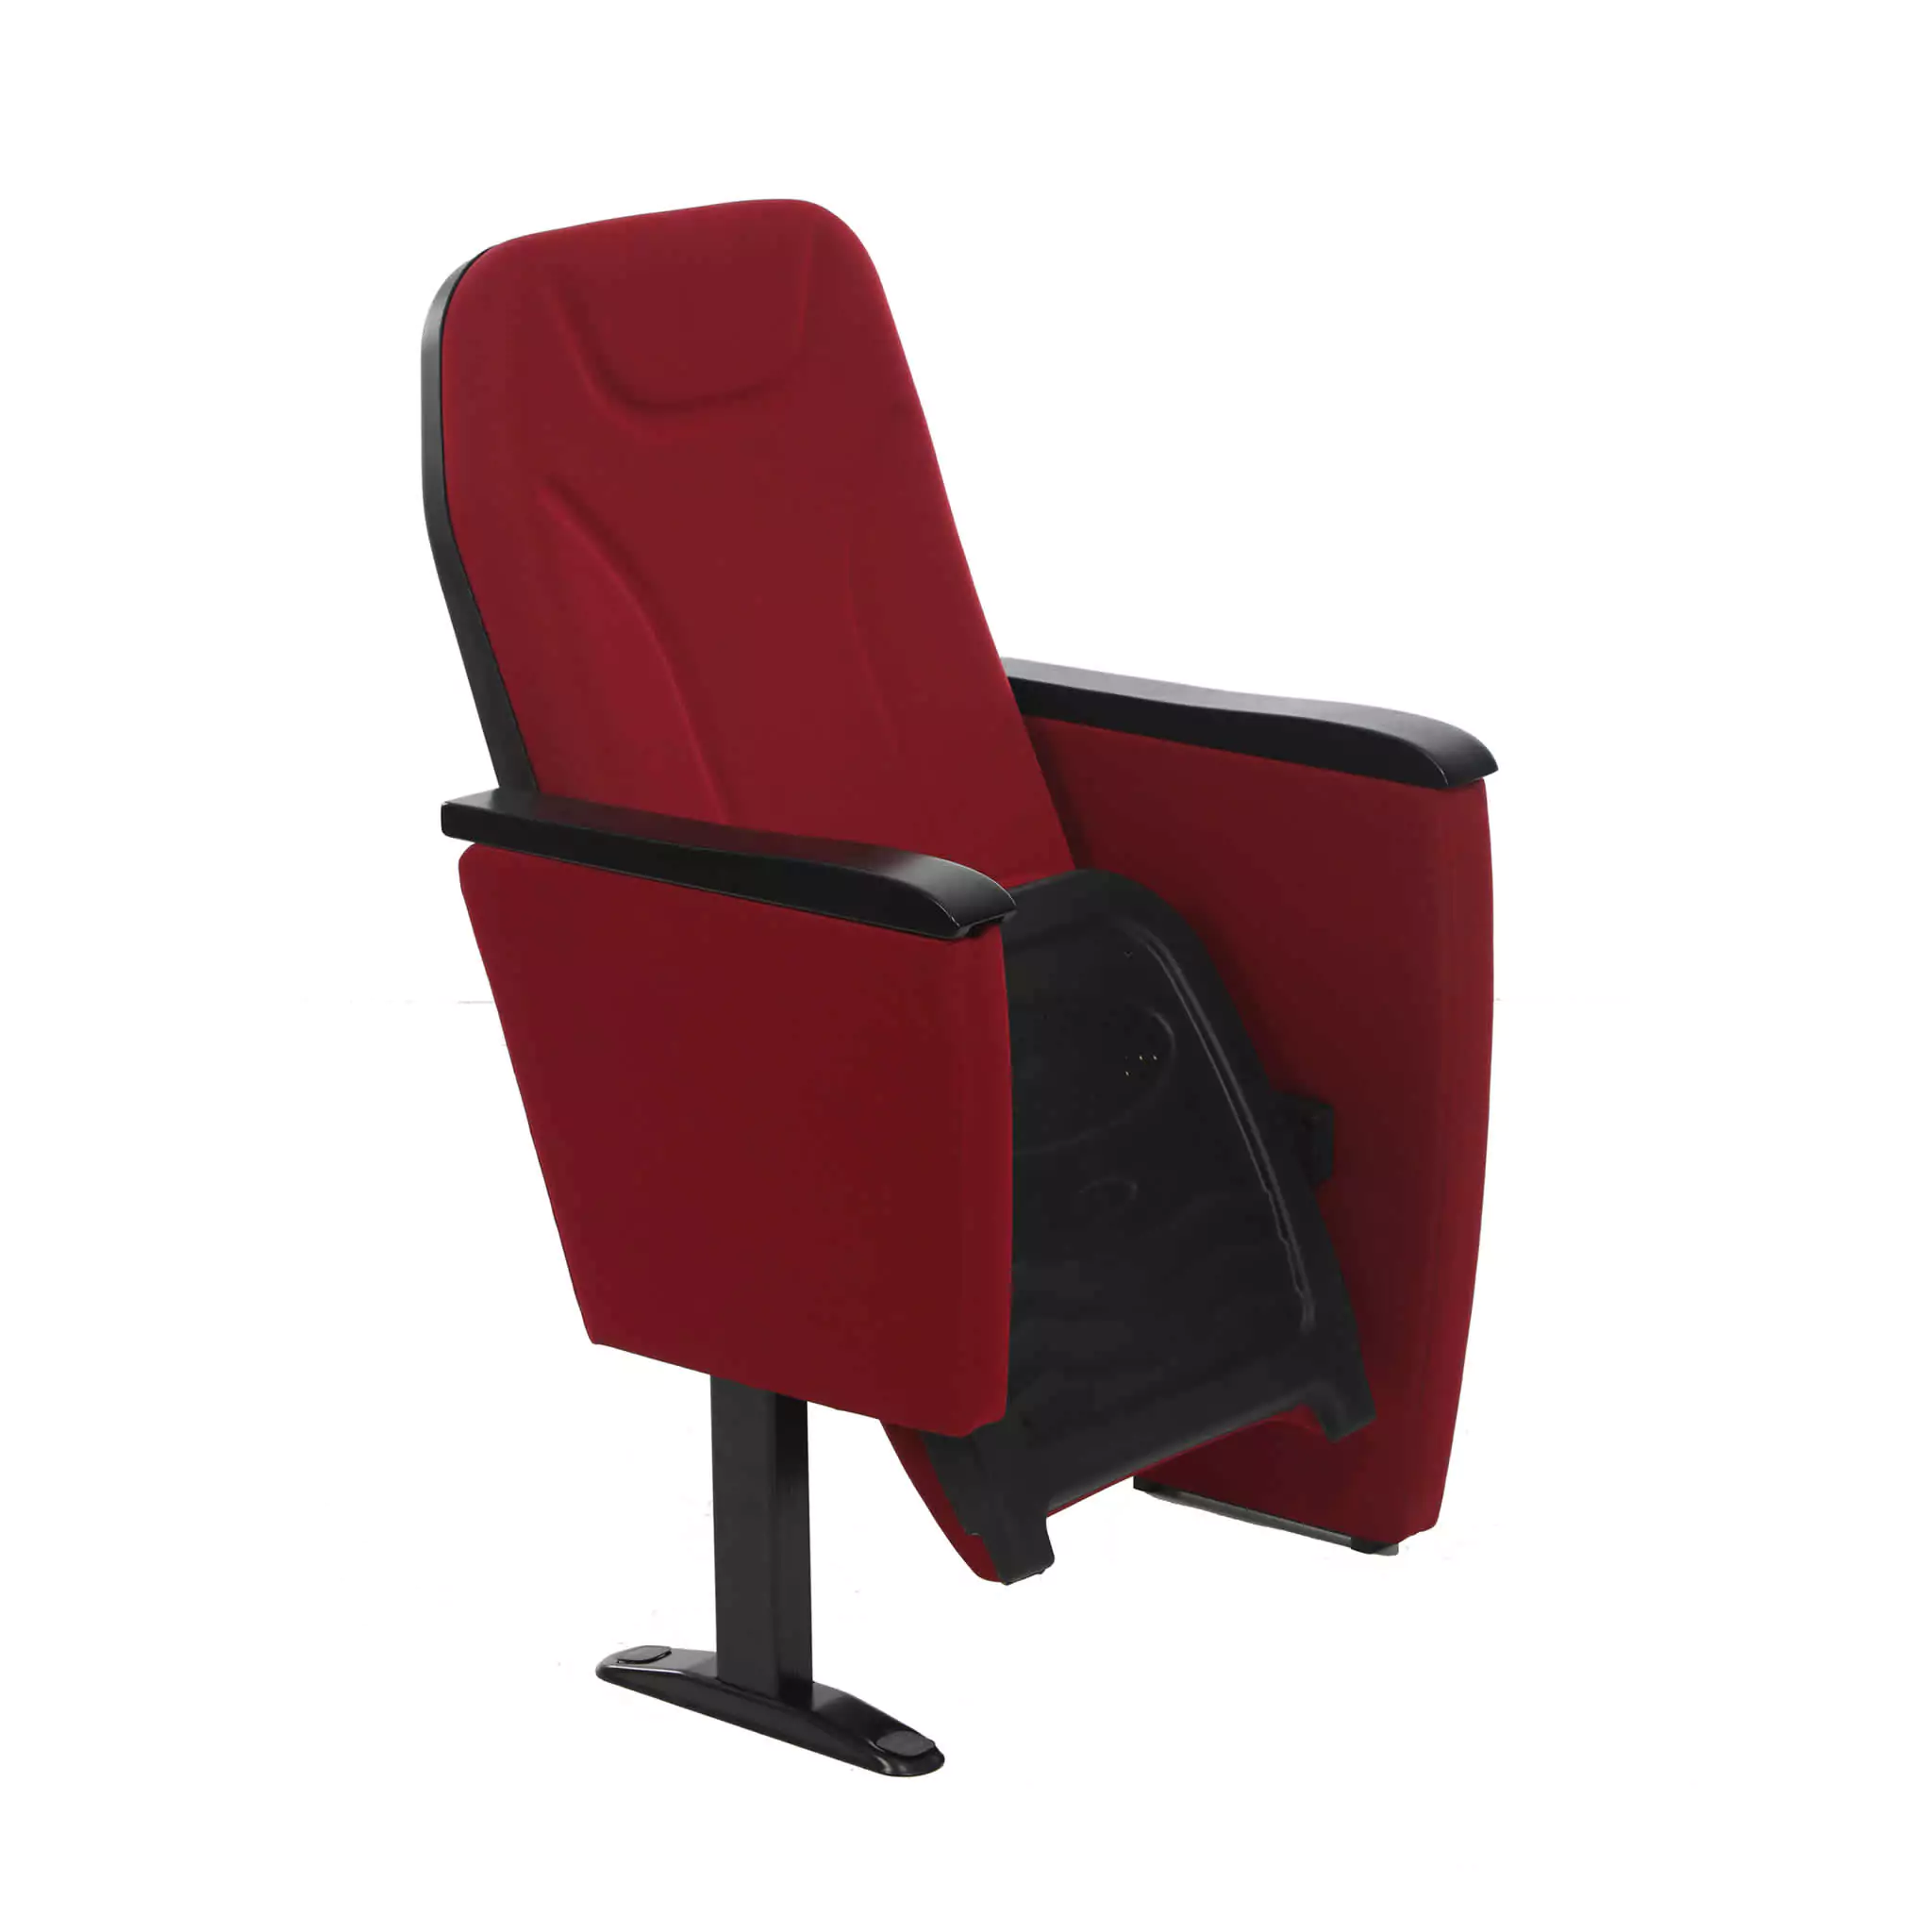 Seat Model: ZIRCON 03 Image